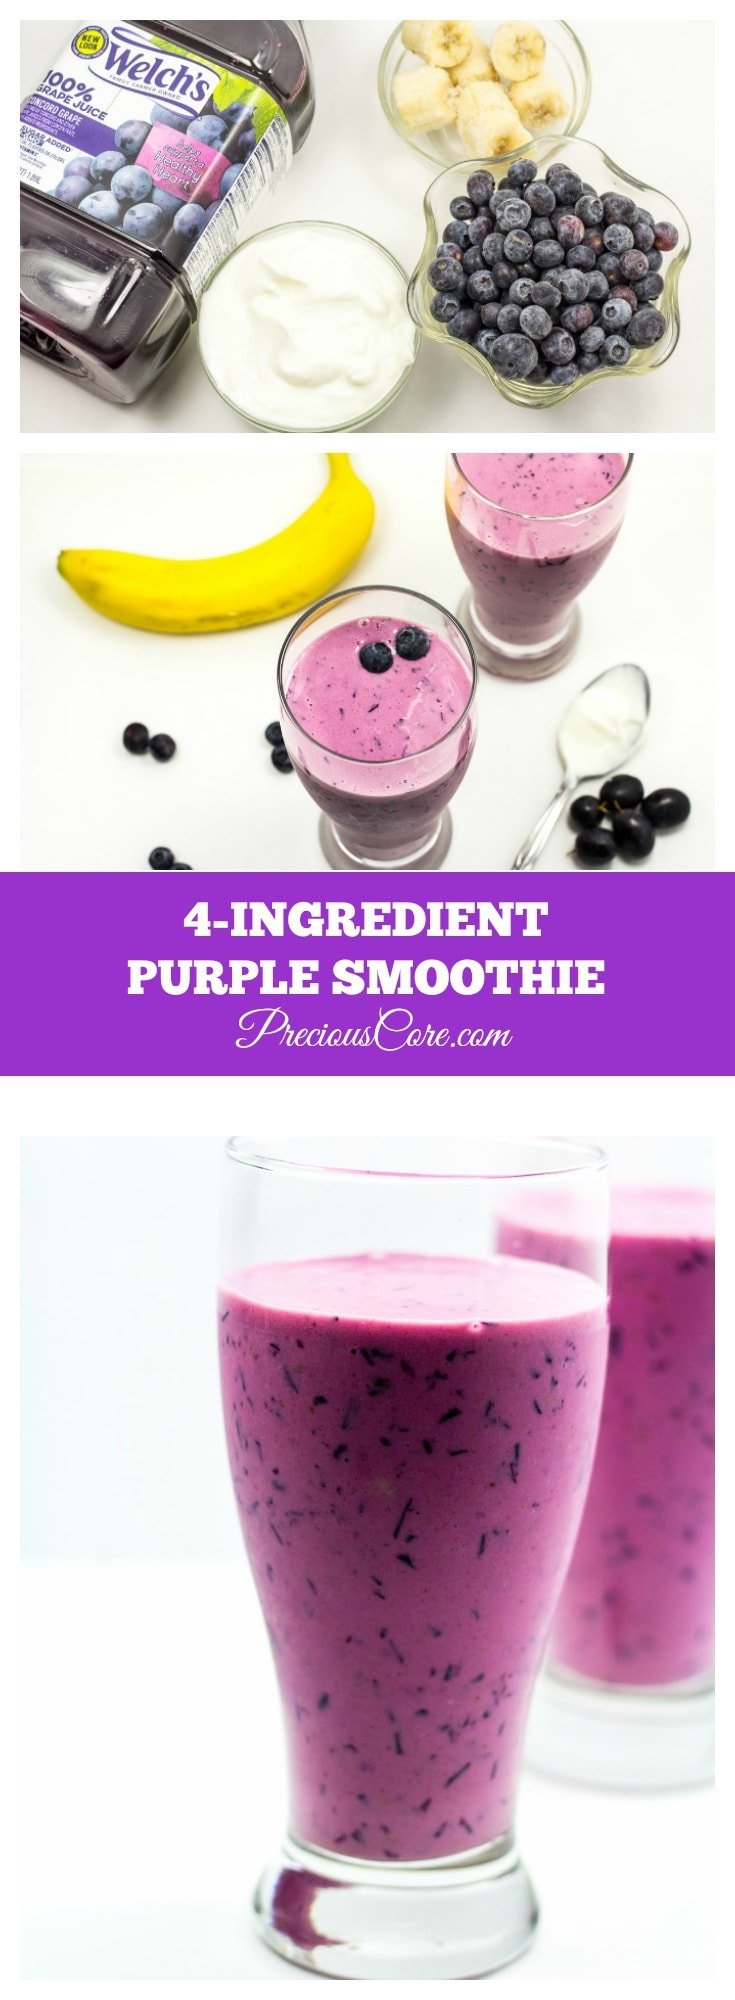 4-Ingredient Purple Smoothie